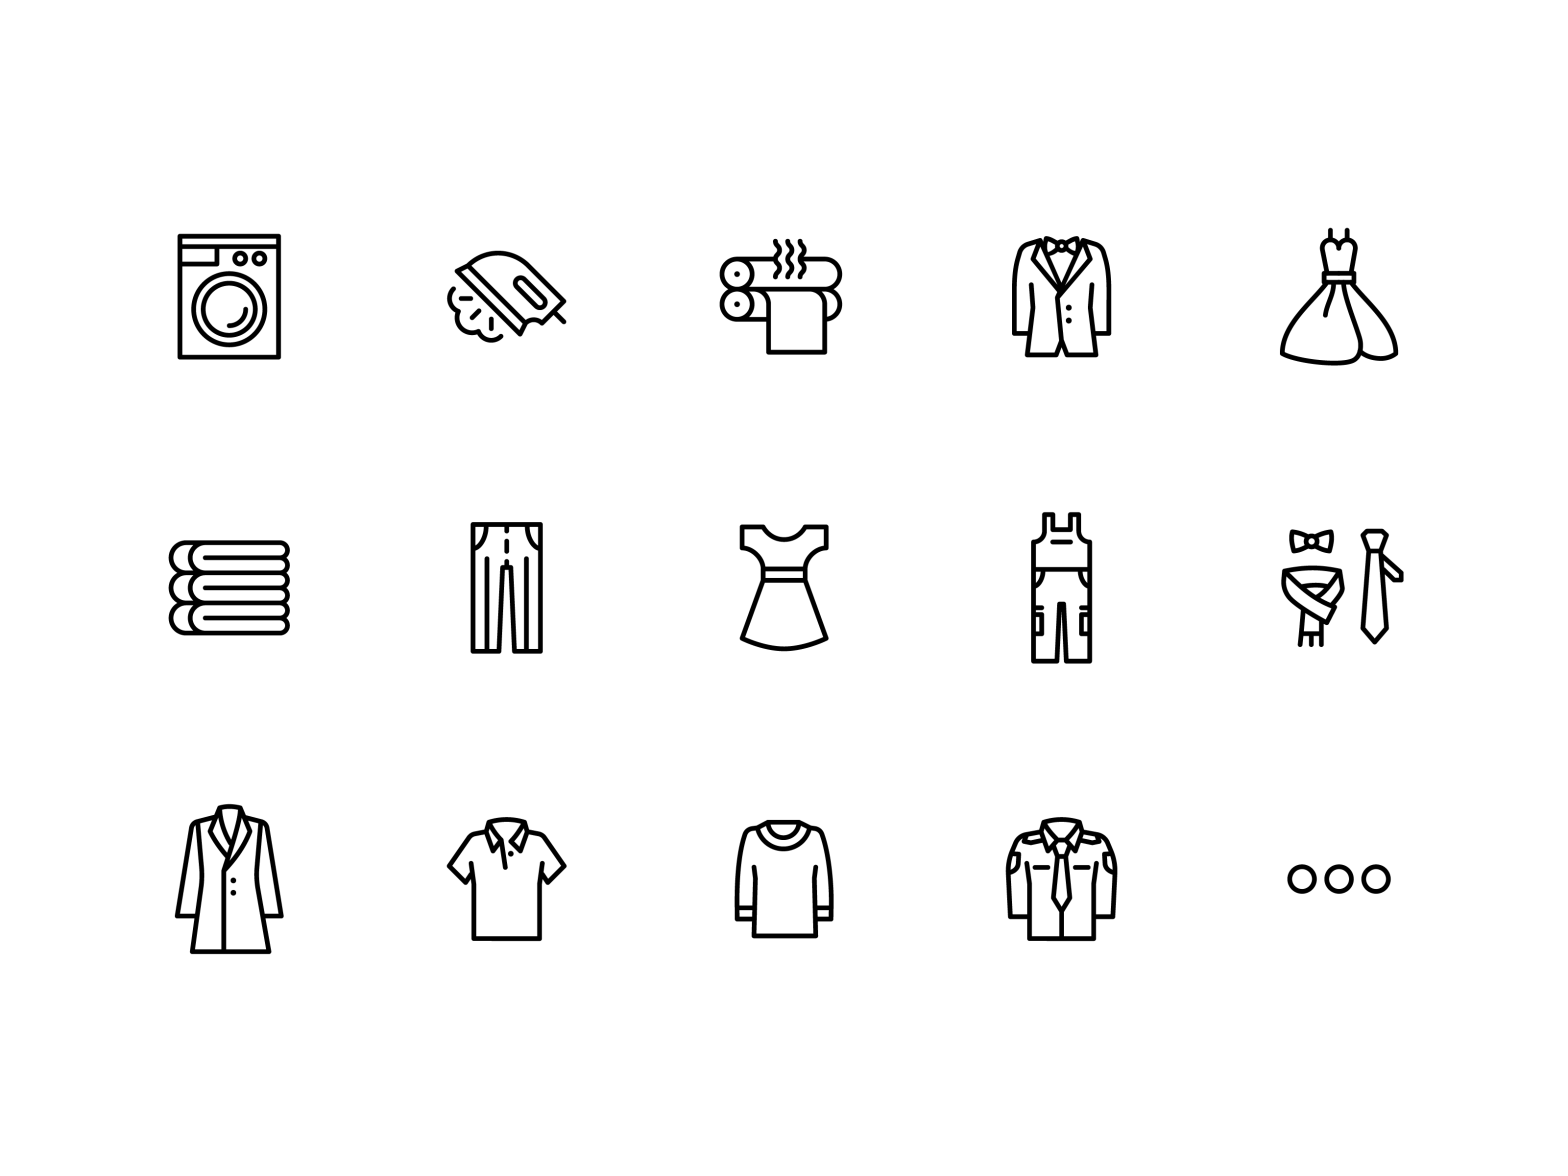 Pani, pana pranie – Laundry icons by s'sense on Dribbble